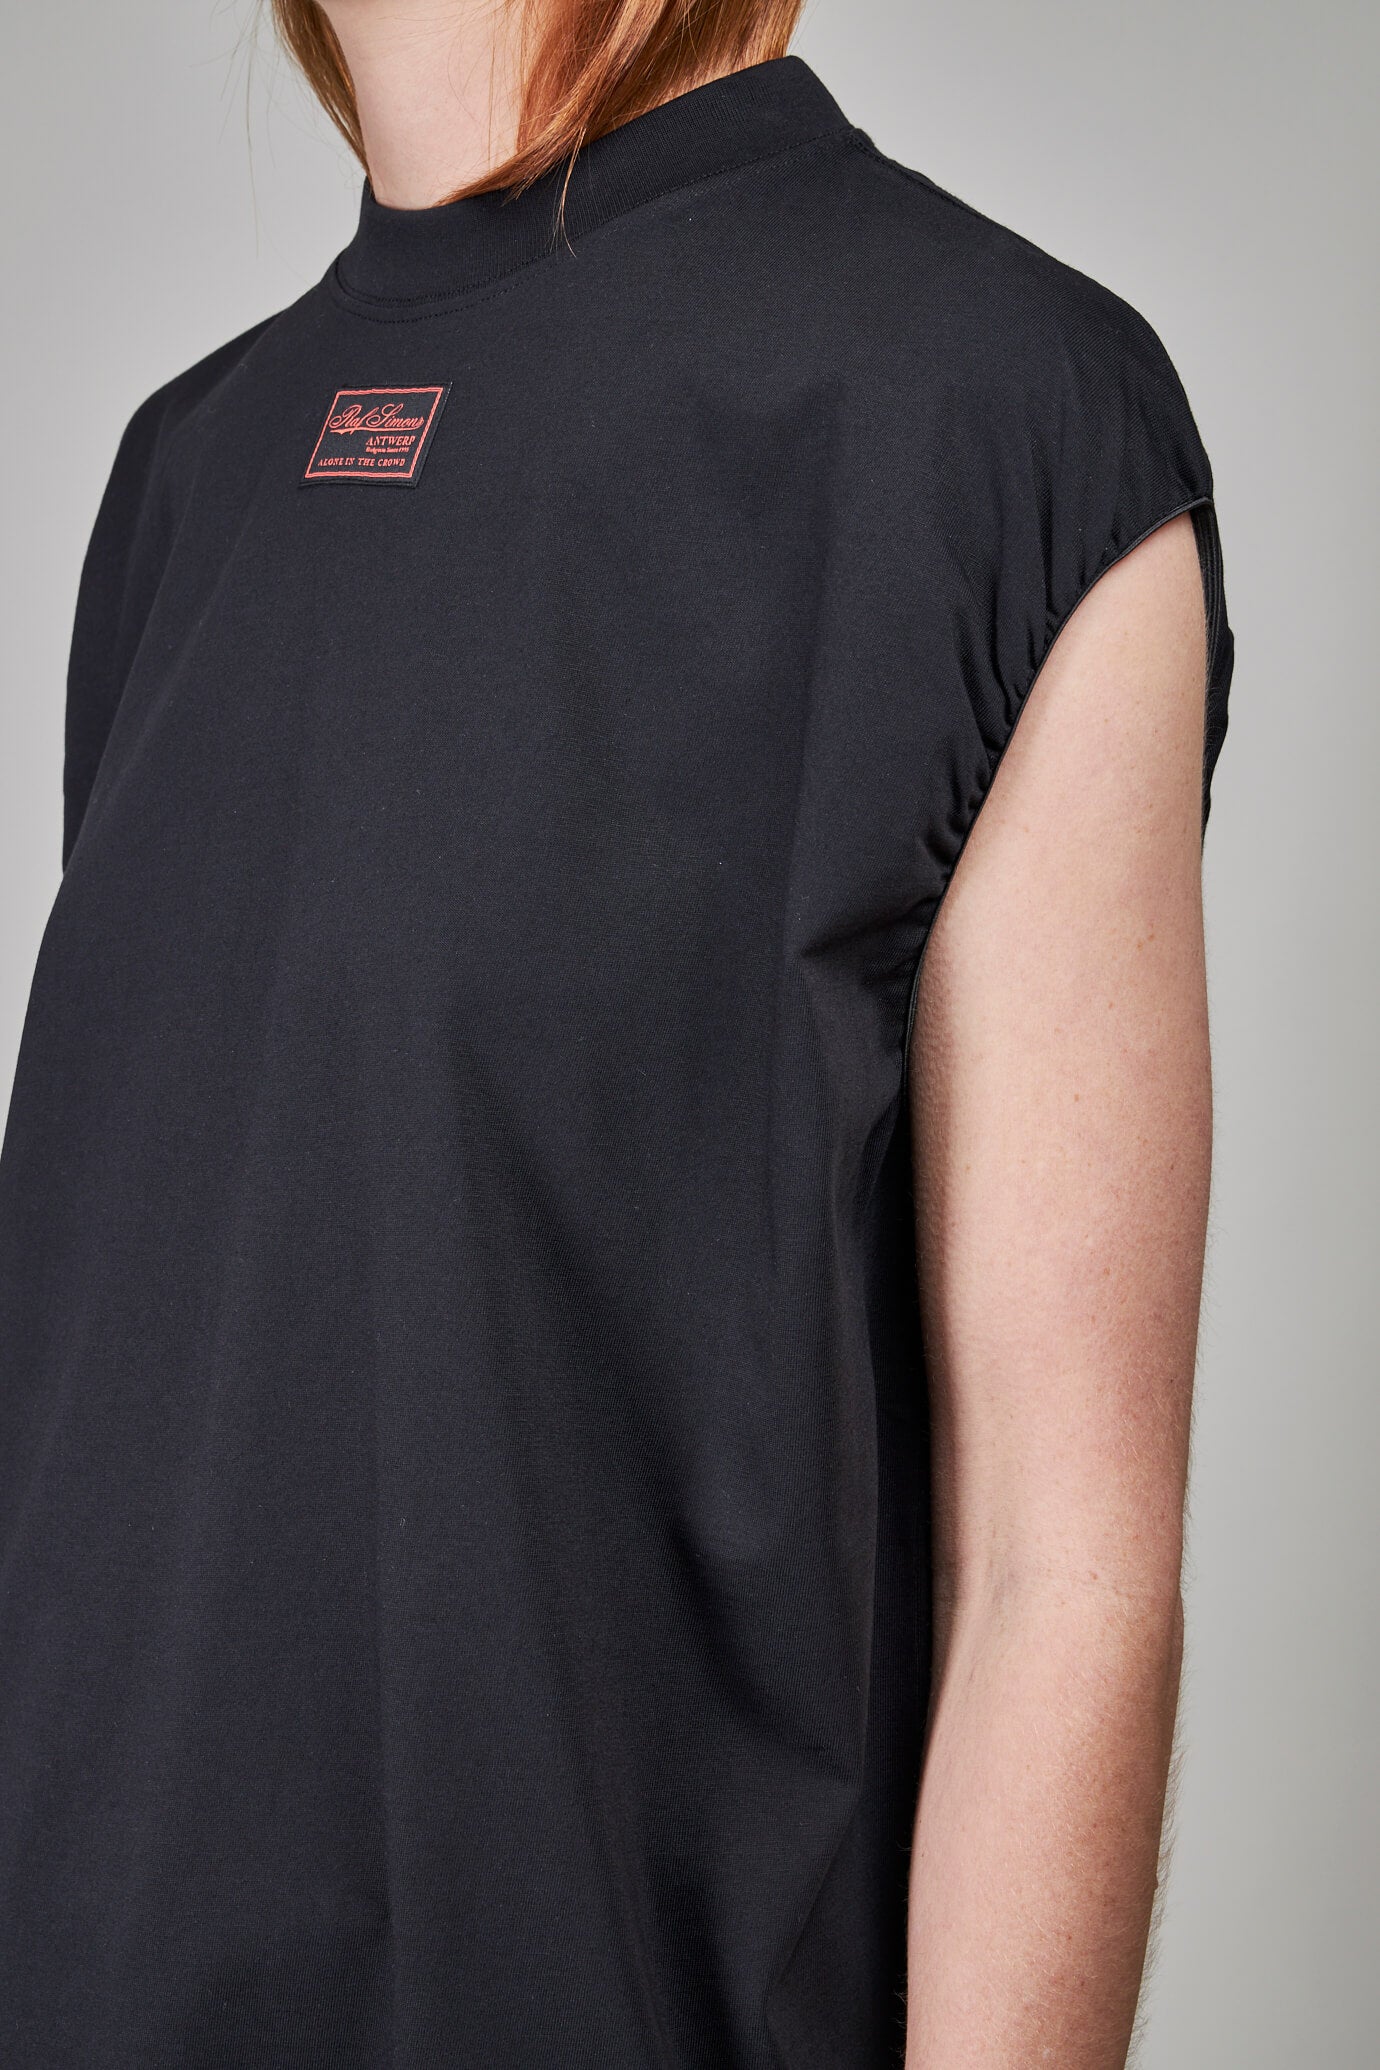 Sleeveless T-shirt with Elastics and Label, black